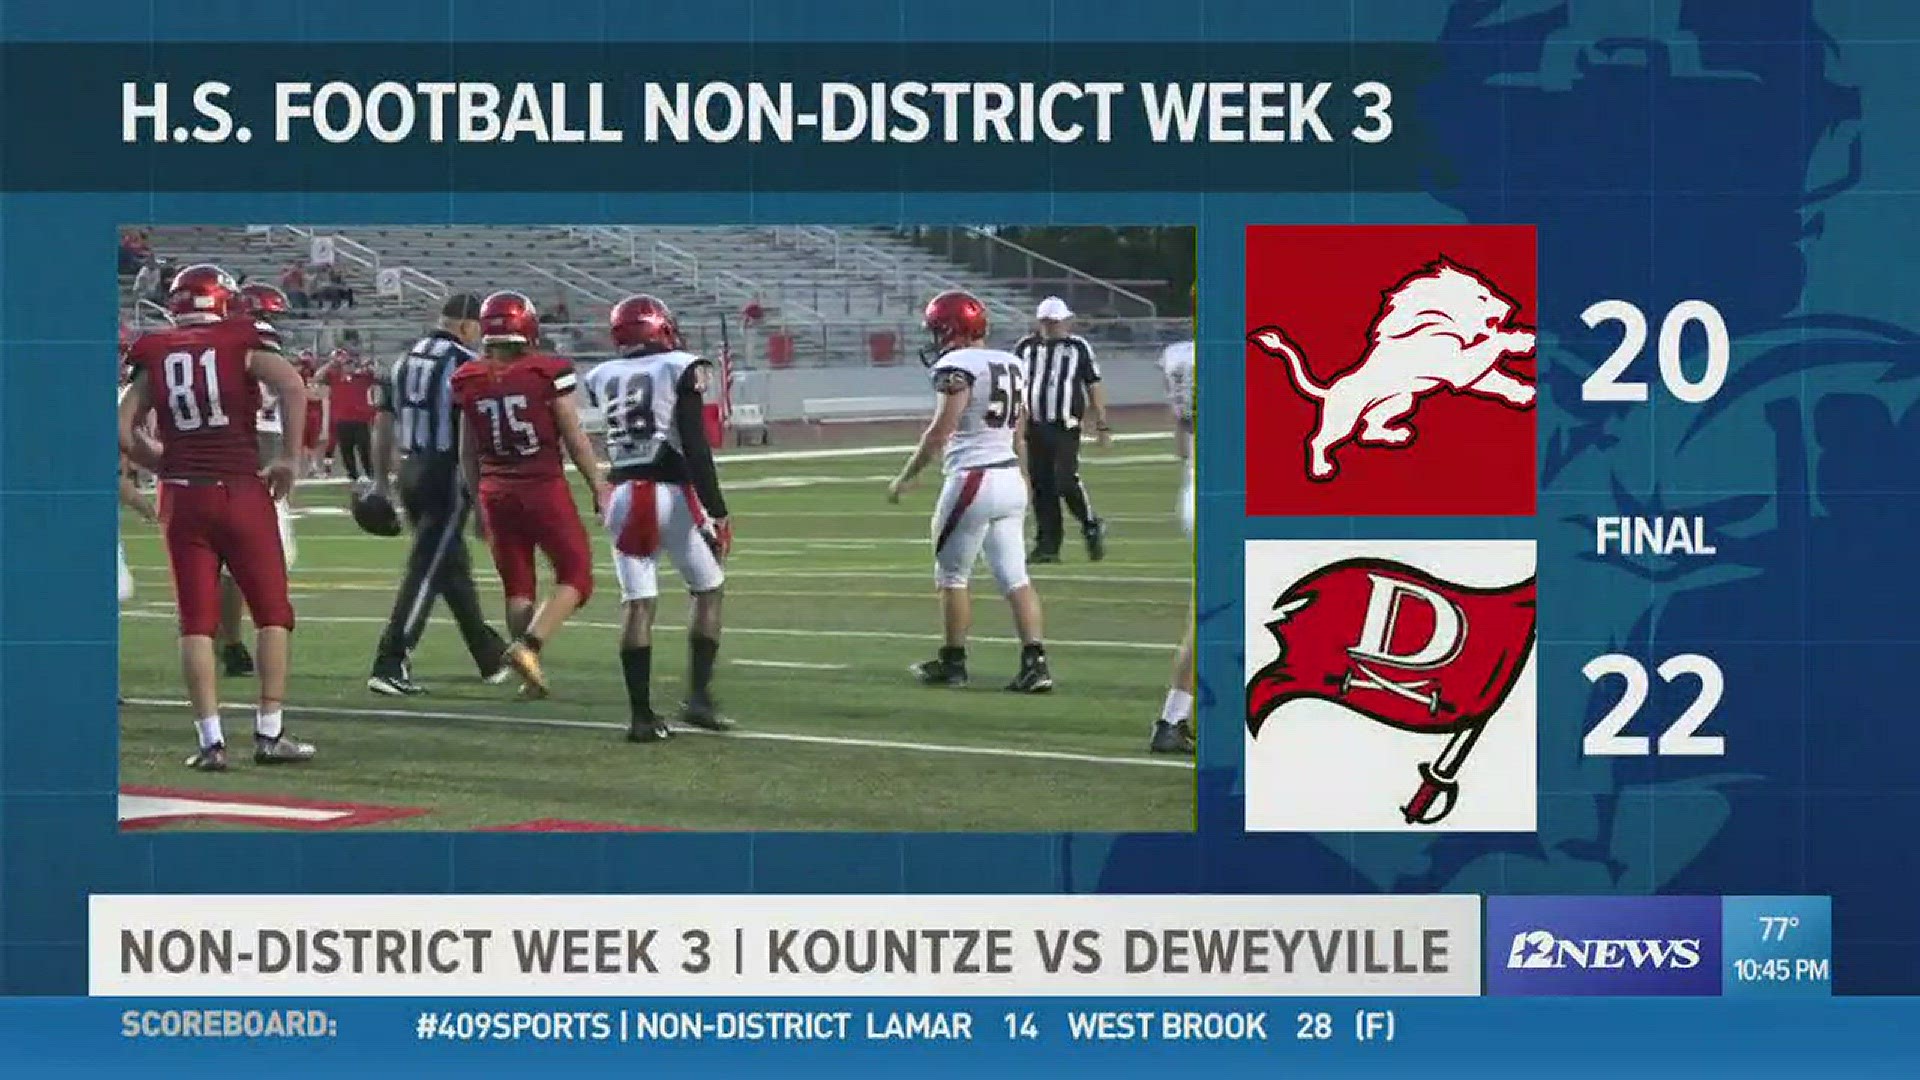 Week 3: Deweyville High School gets the win against Kountze 22 - 20